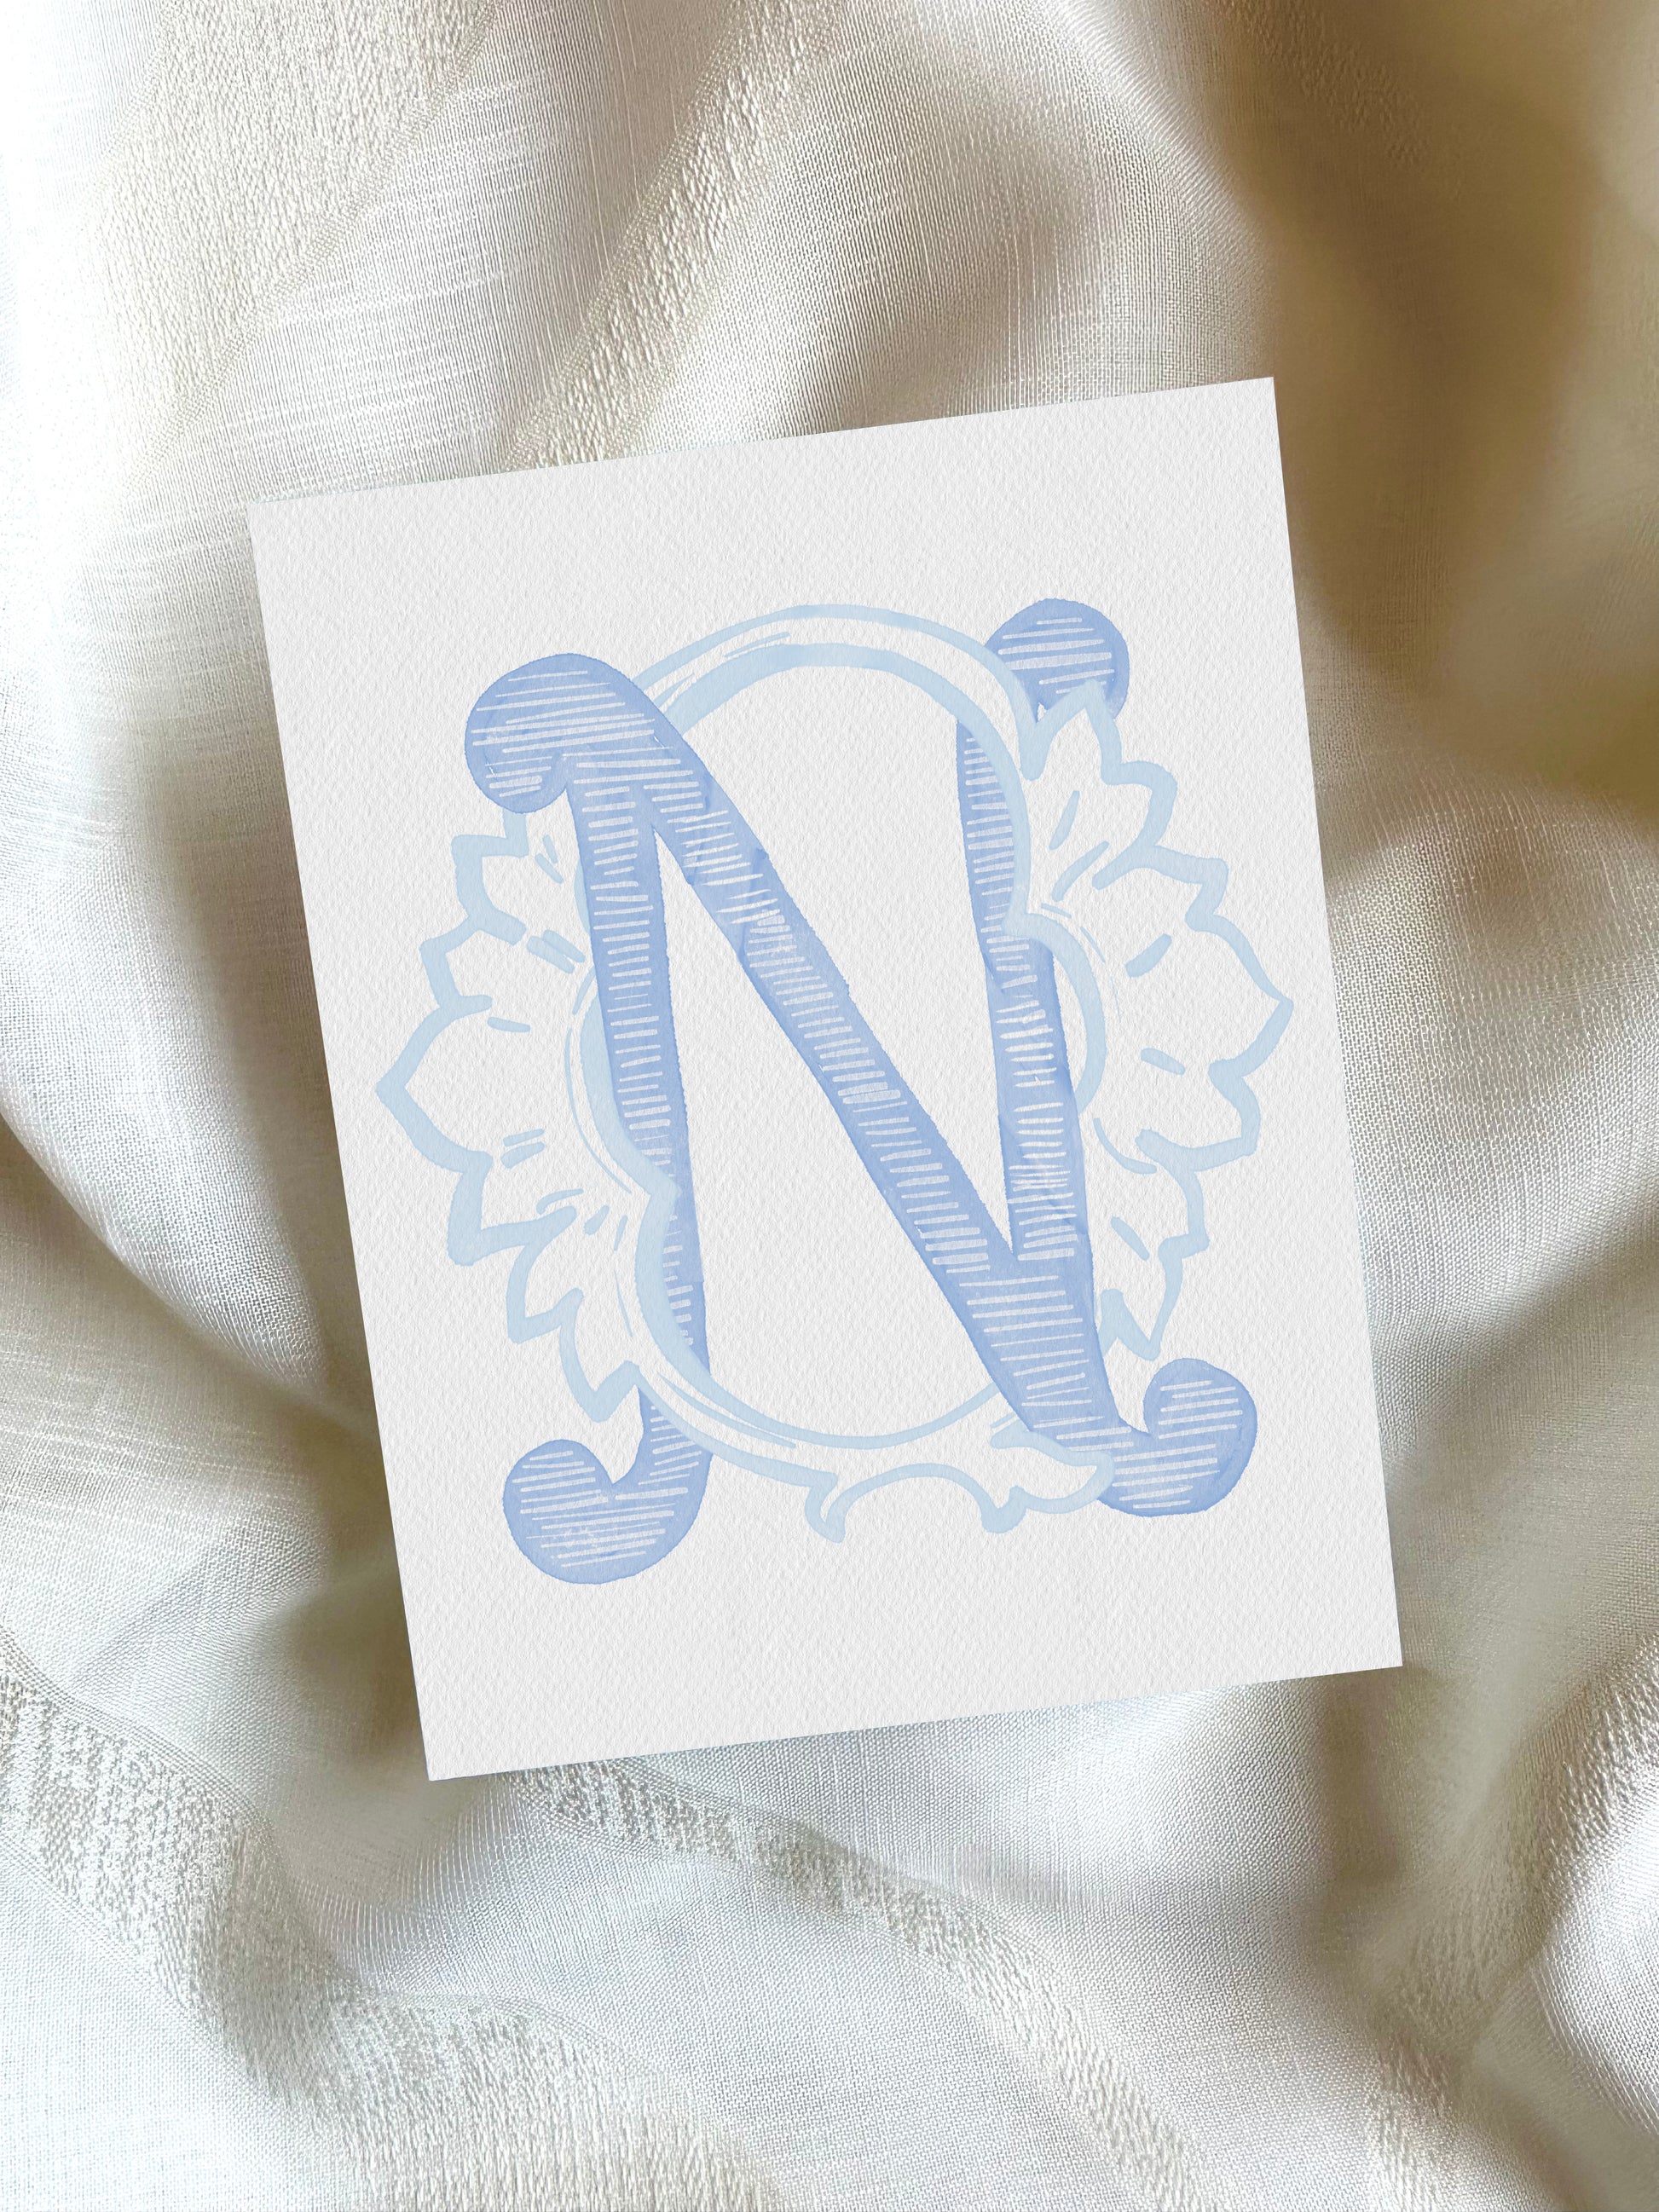 2 Letter Monogram with Letters NQ QN | Digital Download - Wedding Monogram SVG, Personal Logo, Wedding Logo for Wedding Invitations The Wedding Crest Lab